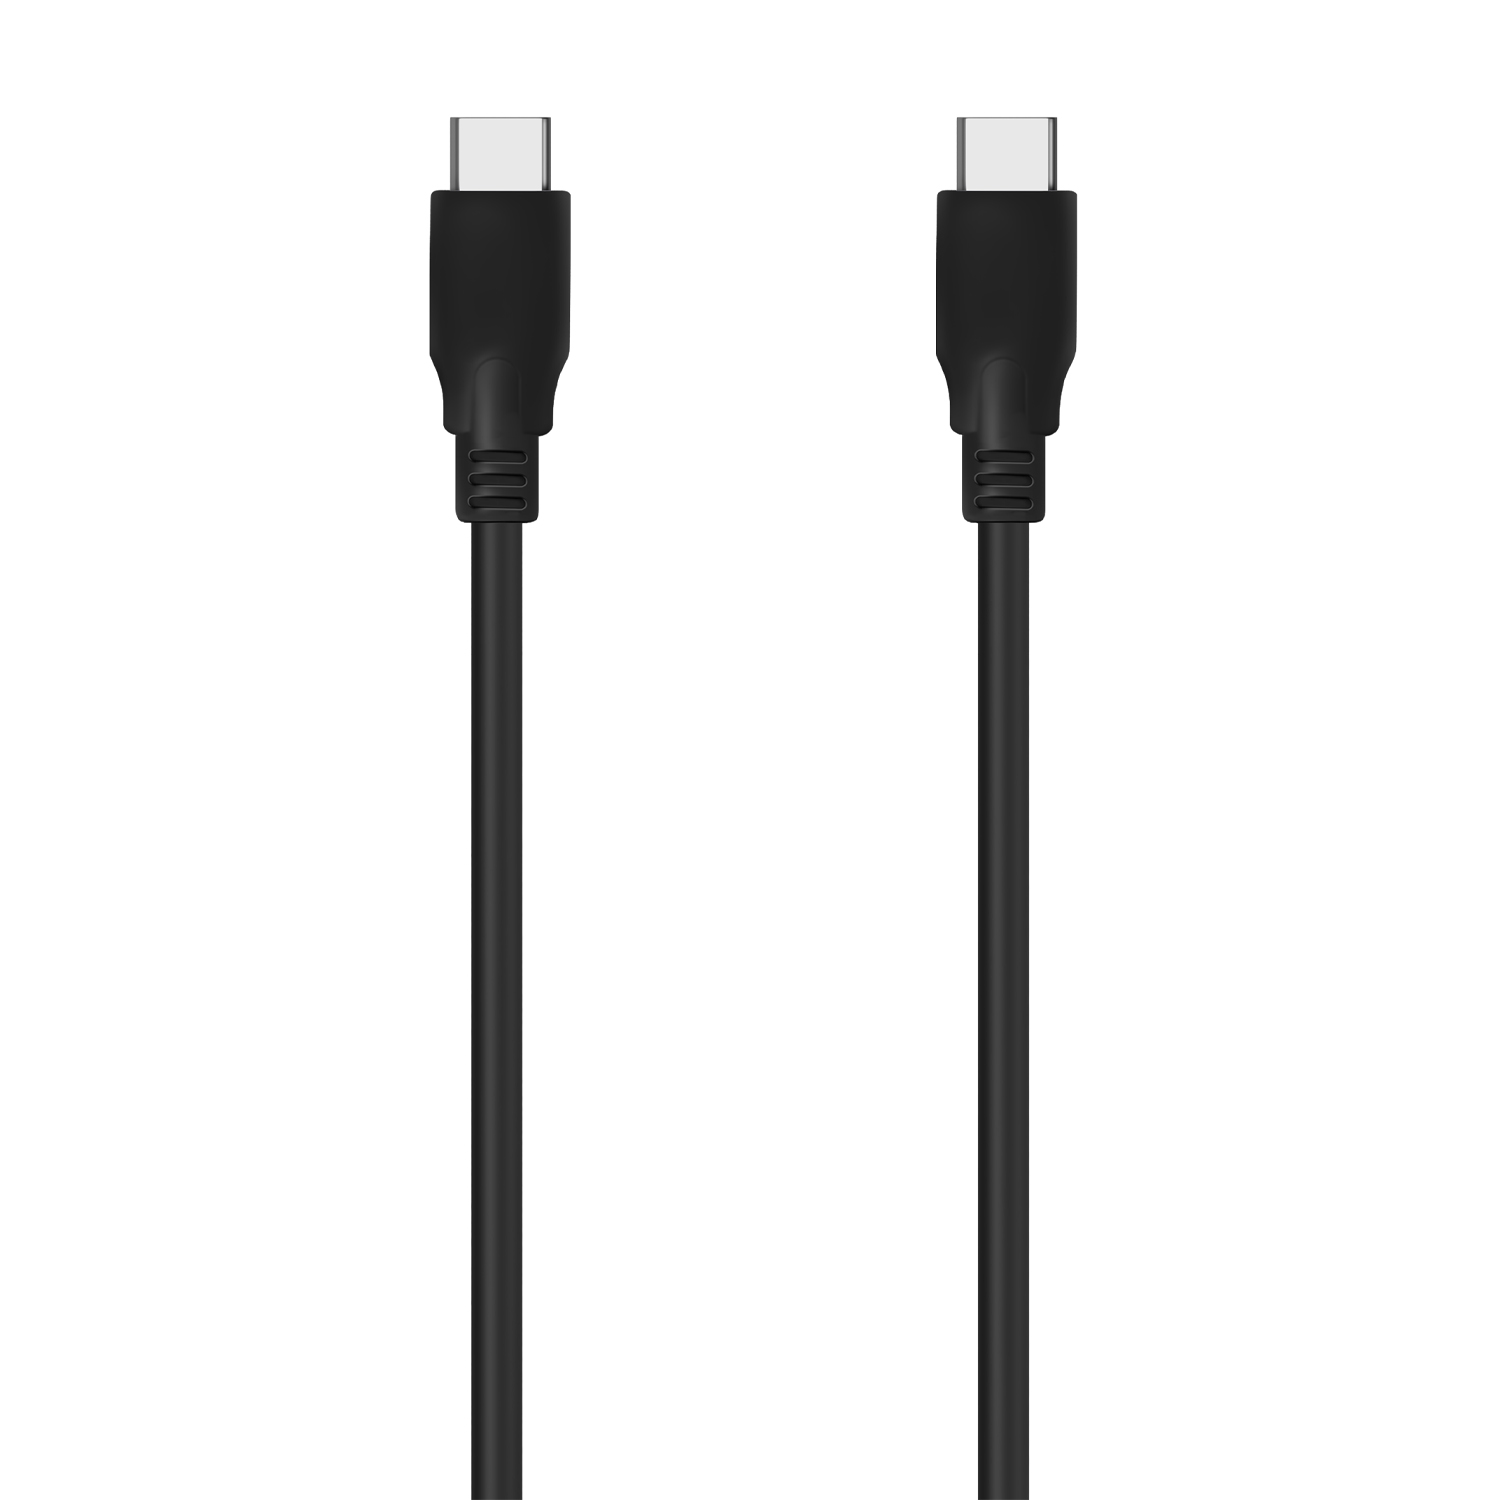 Nanocable Cable USB 3.1 Tipo C a USB Tipo A Macho/Hembra Negro